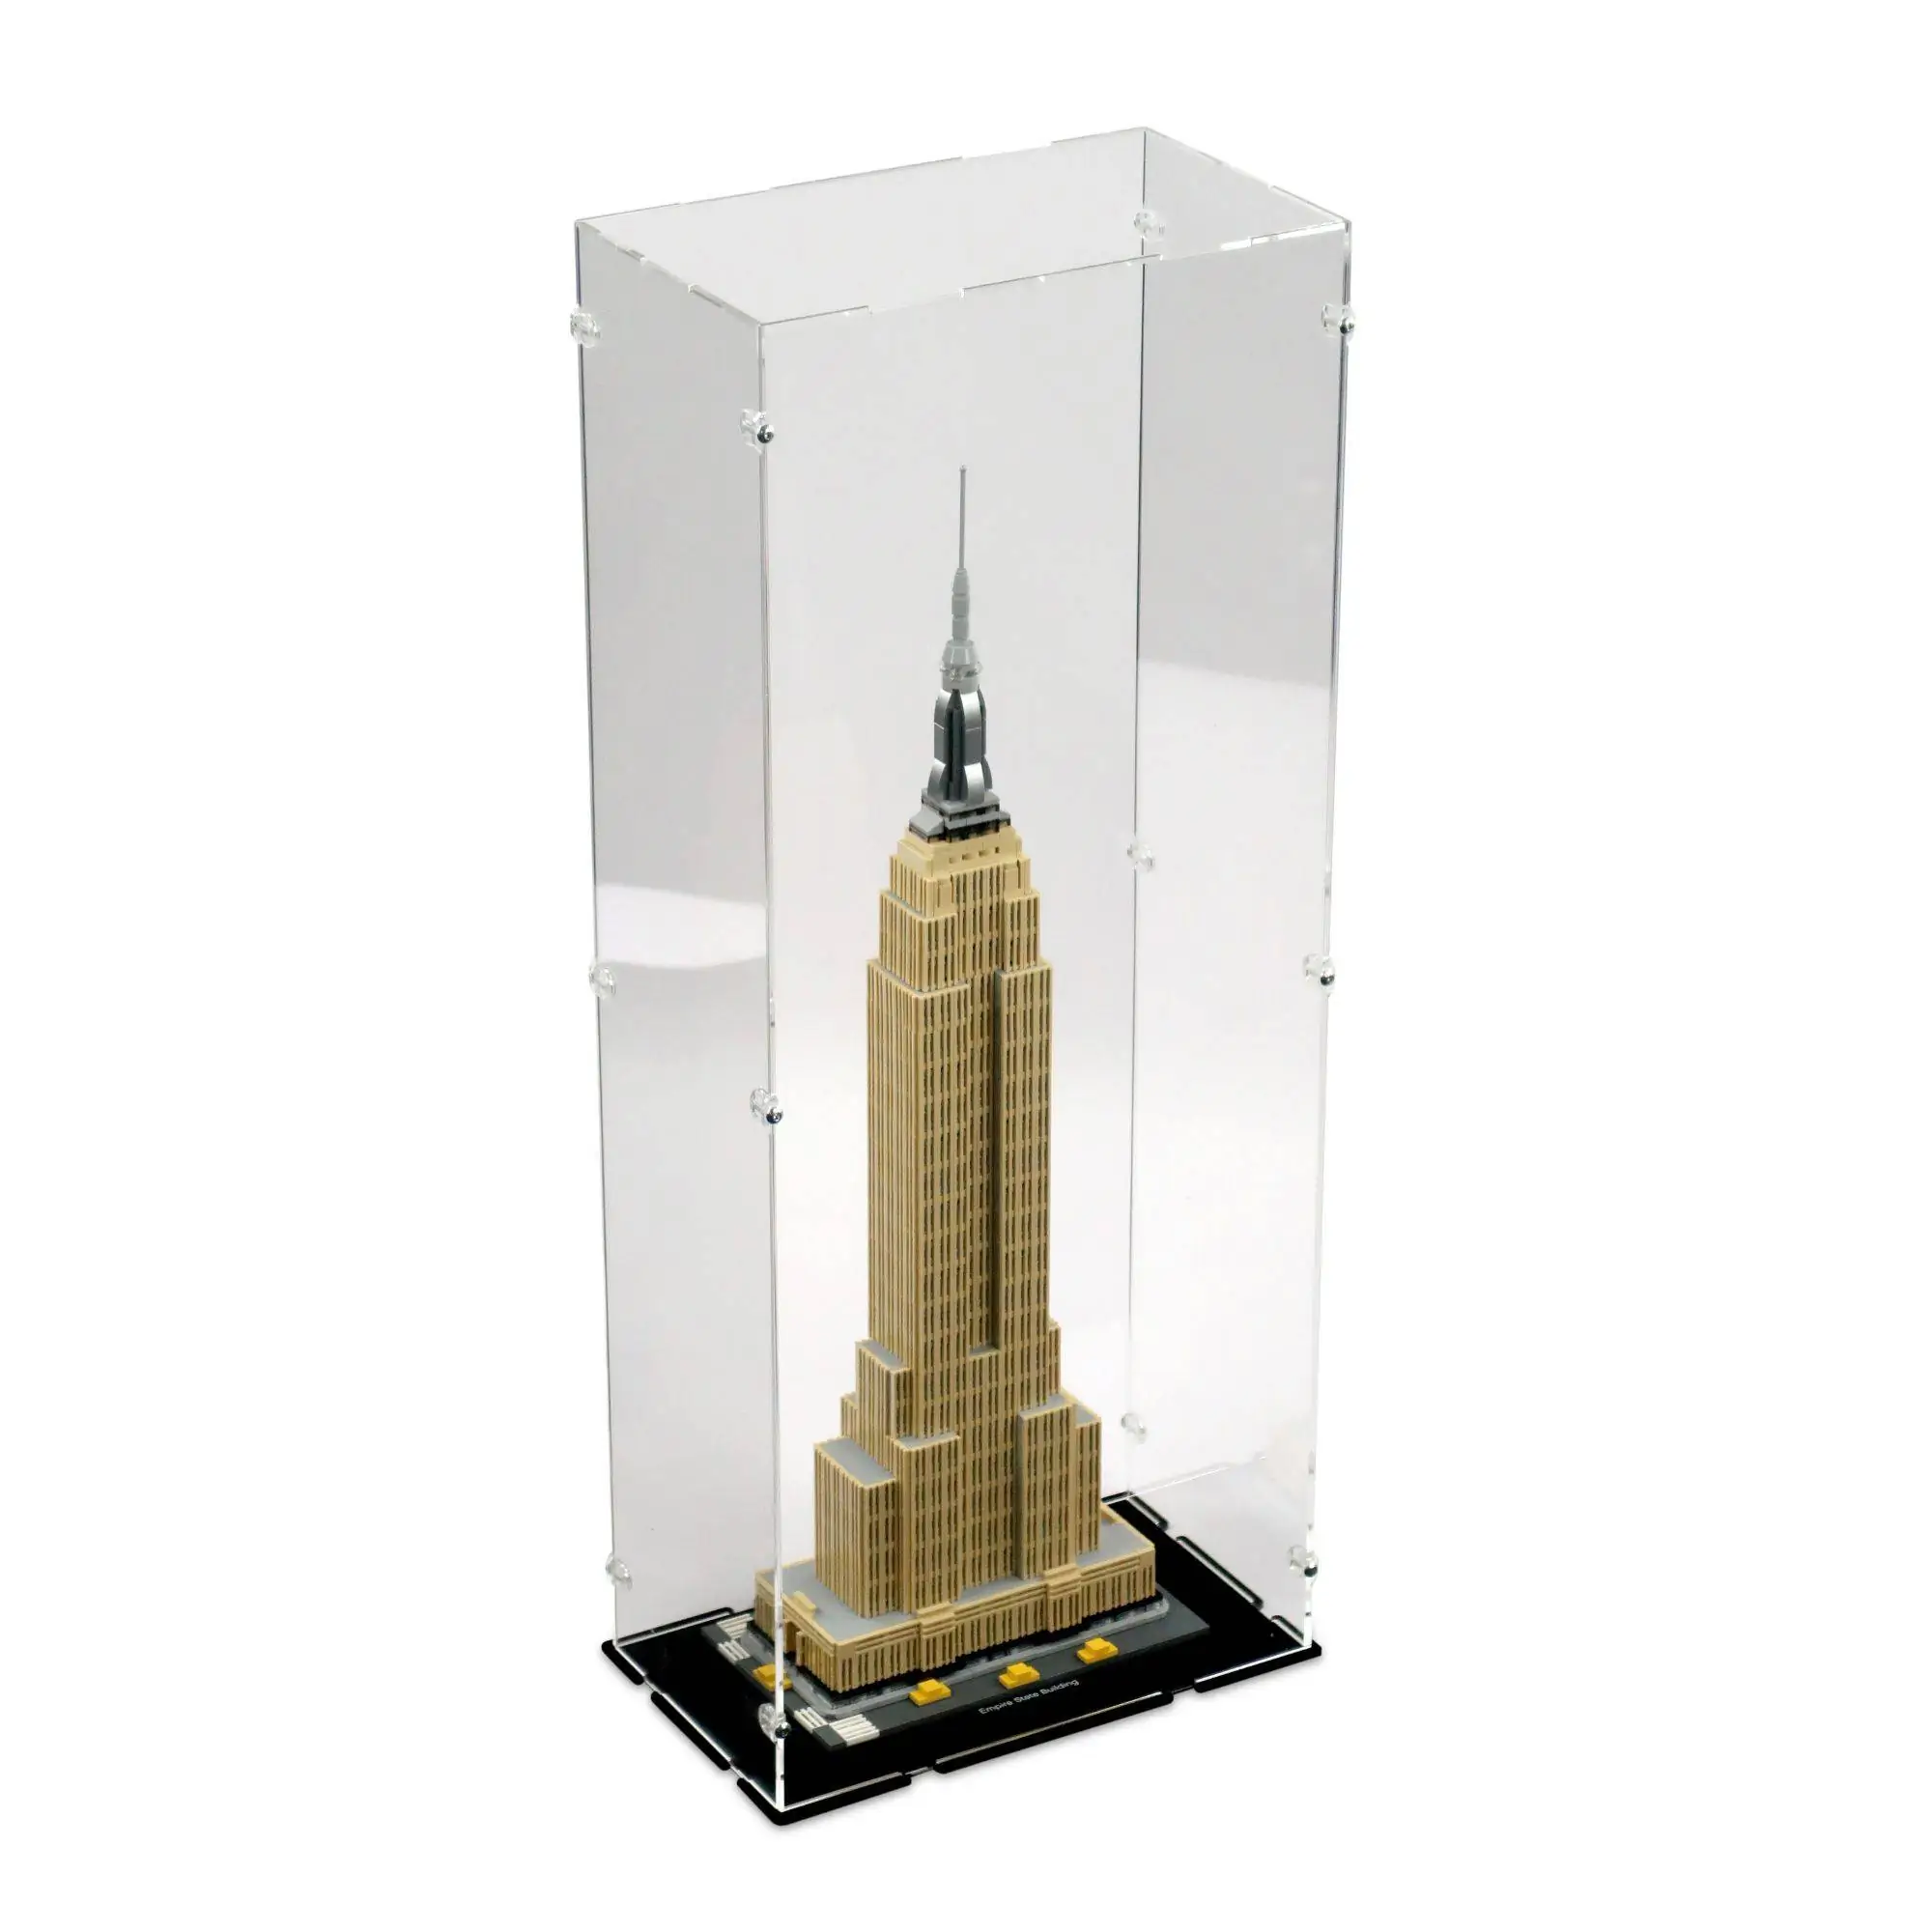 George Hanbury Pygmalion Bot Acrylic Display Case for LEGO Empire State Building | iDisplayit